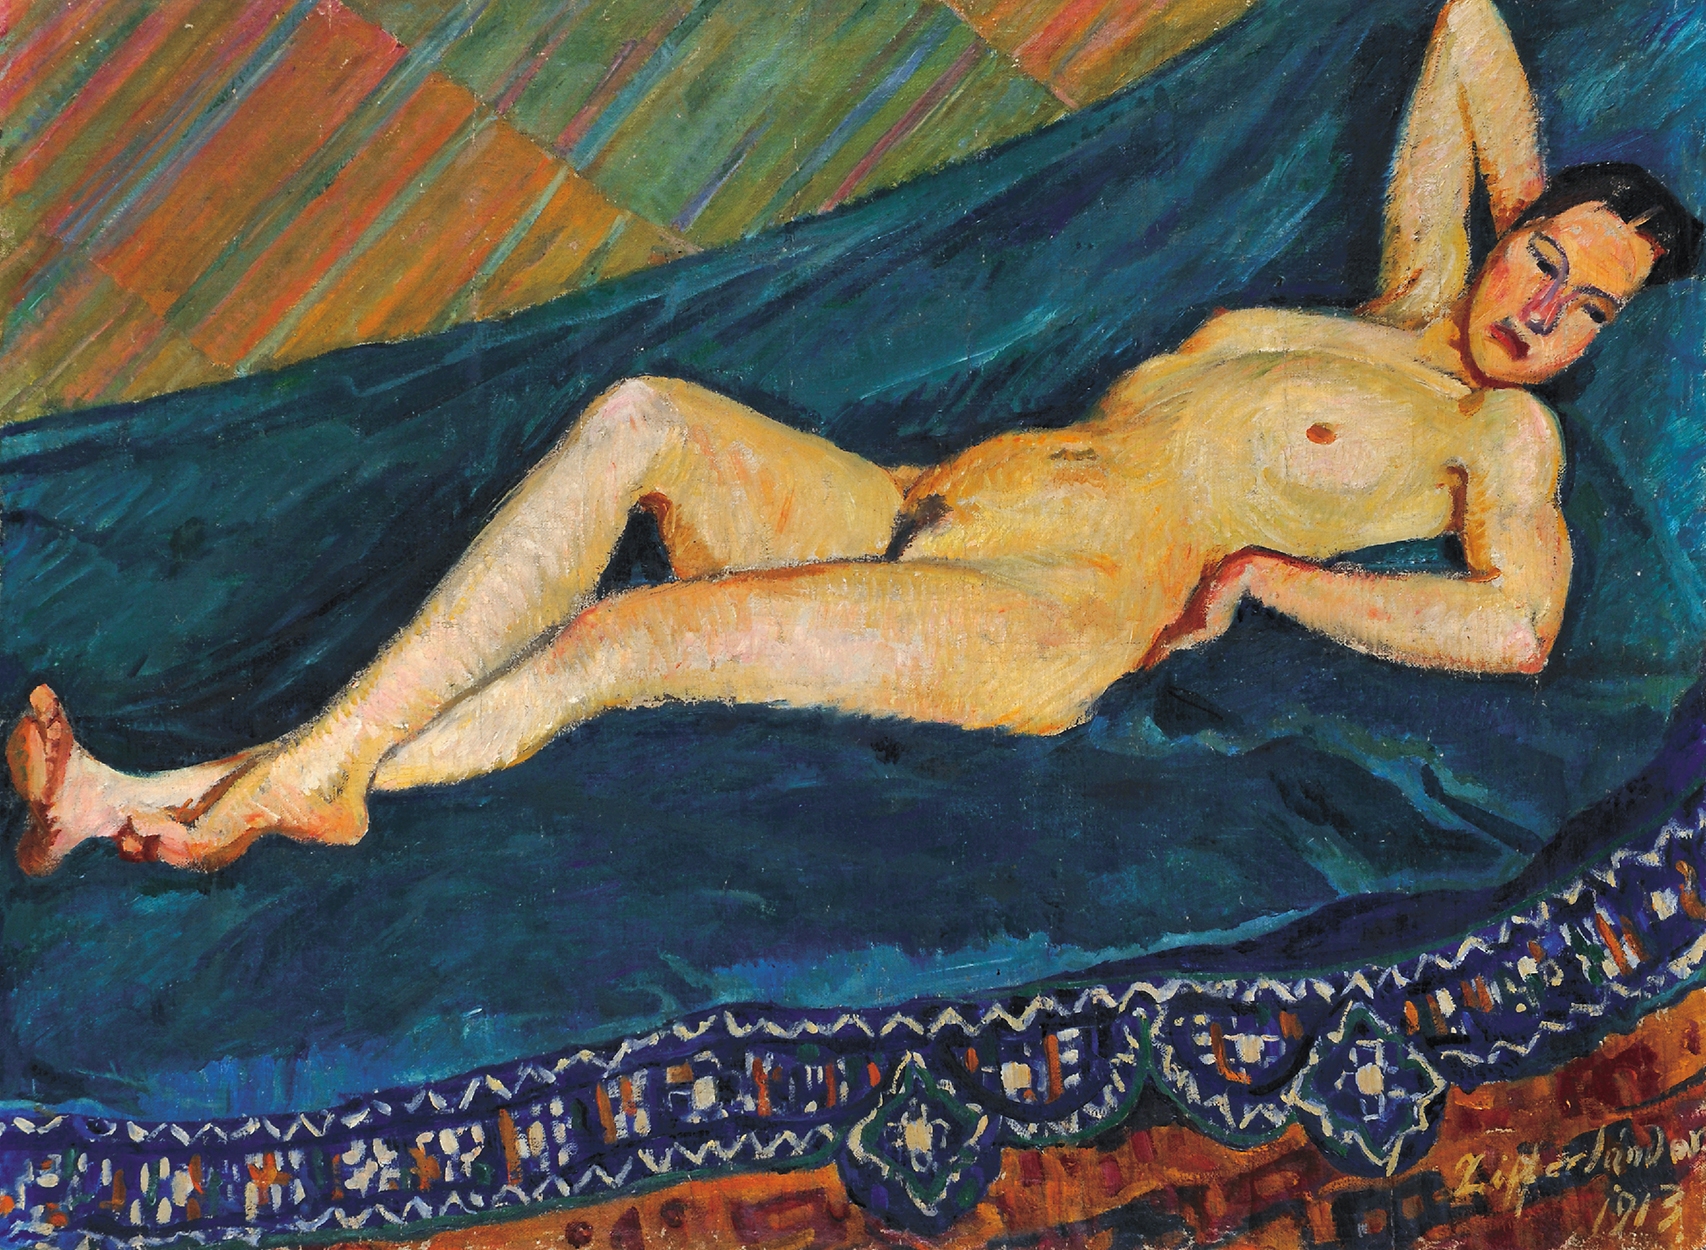 Ziffer Sándor (1880-1962) Resting Nude, 1913